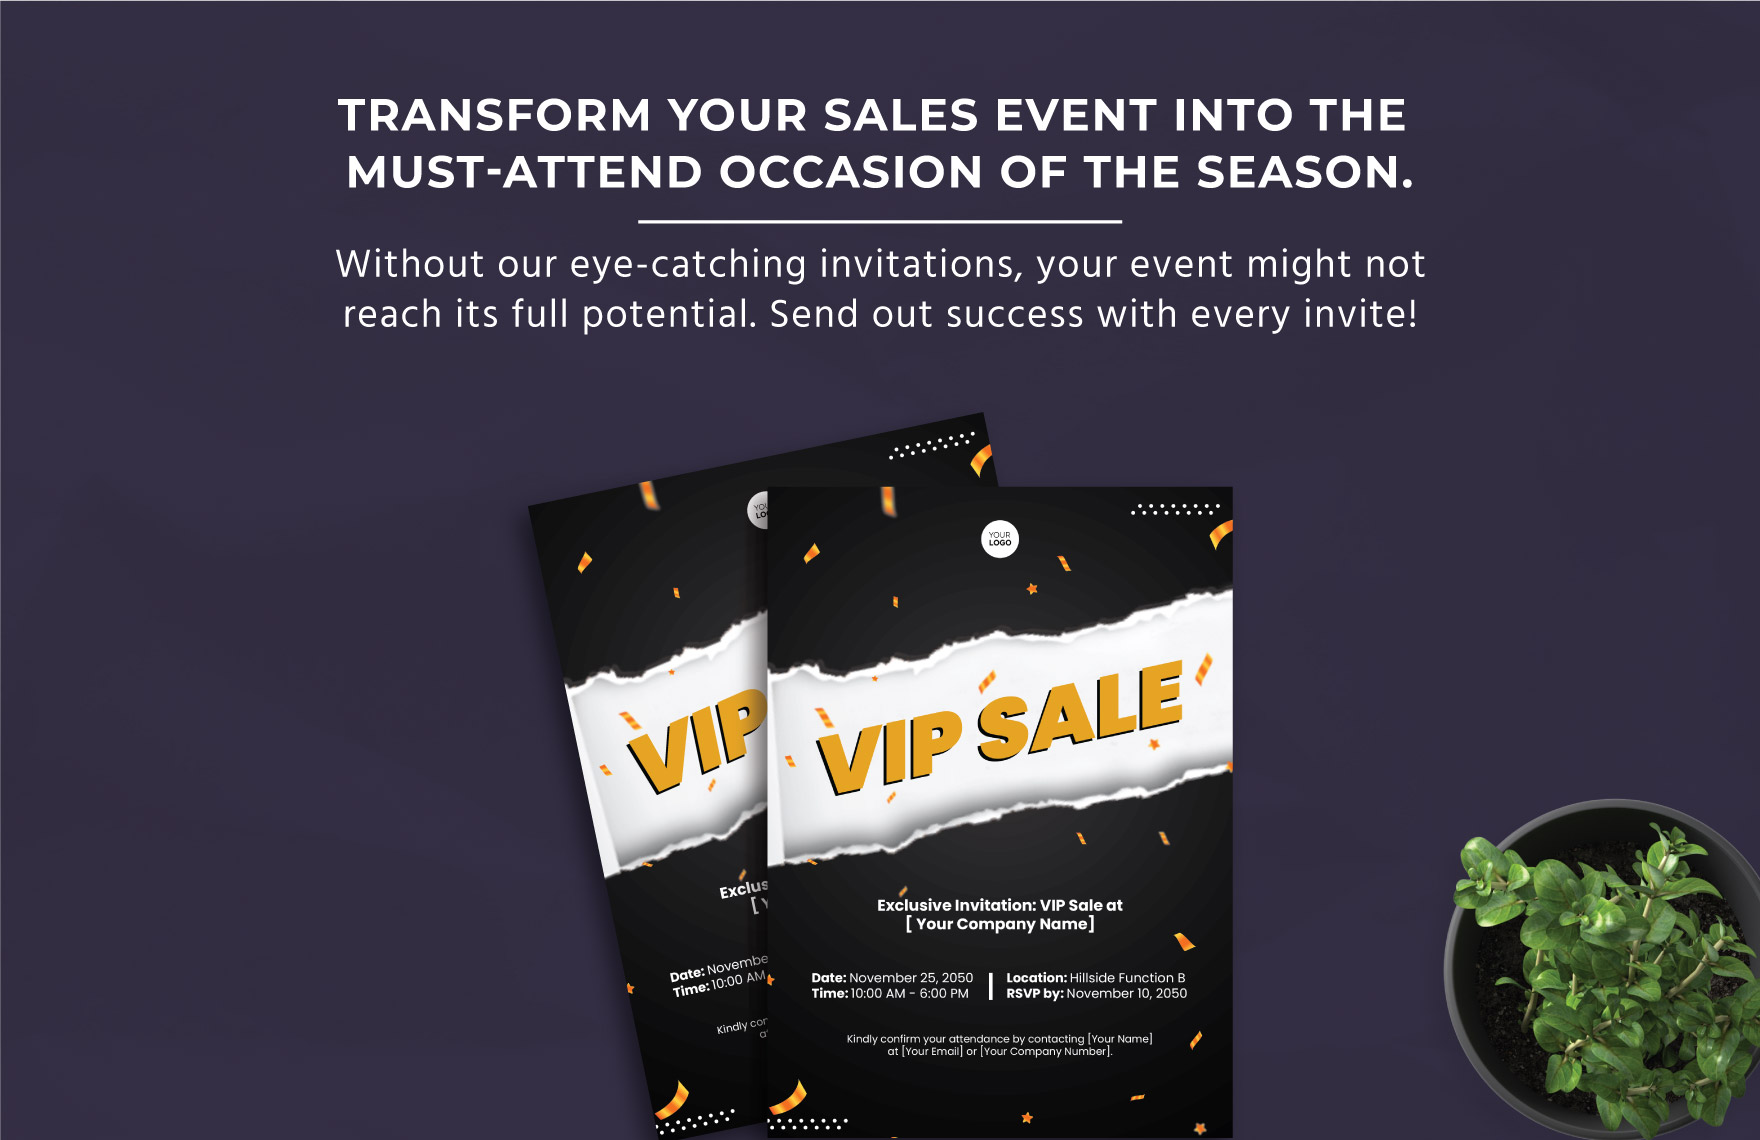 Sales VIP Sale Invitation Card Template